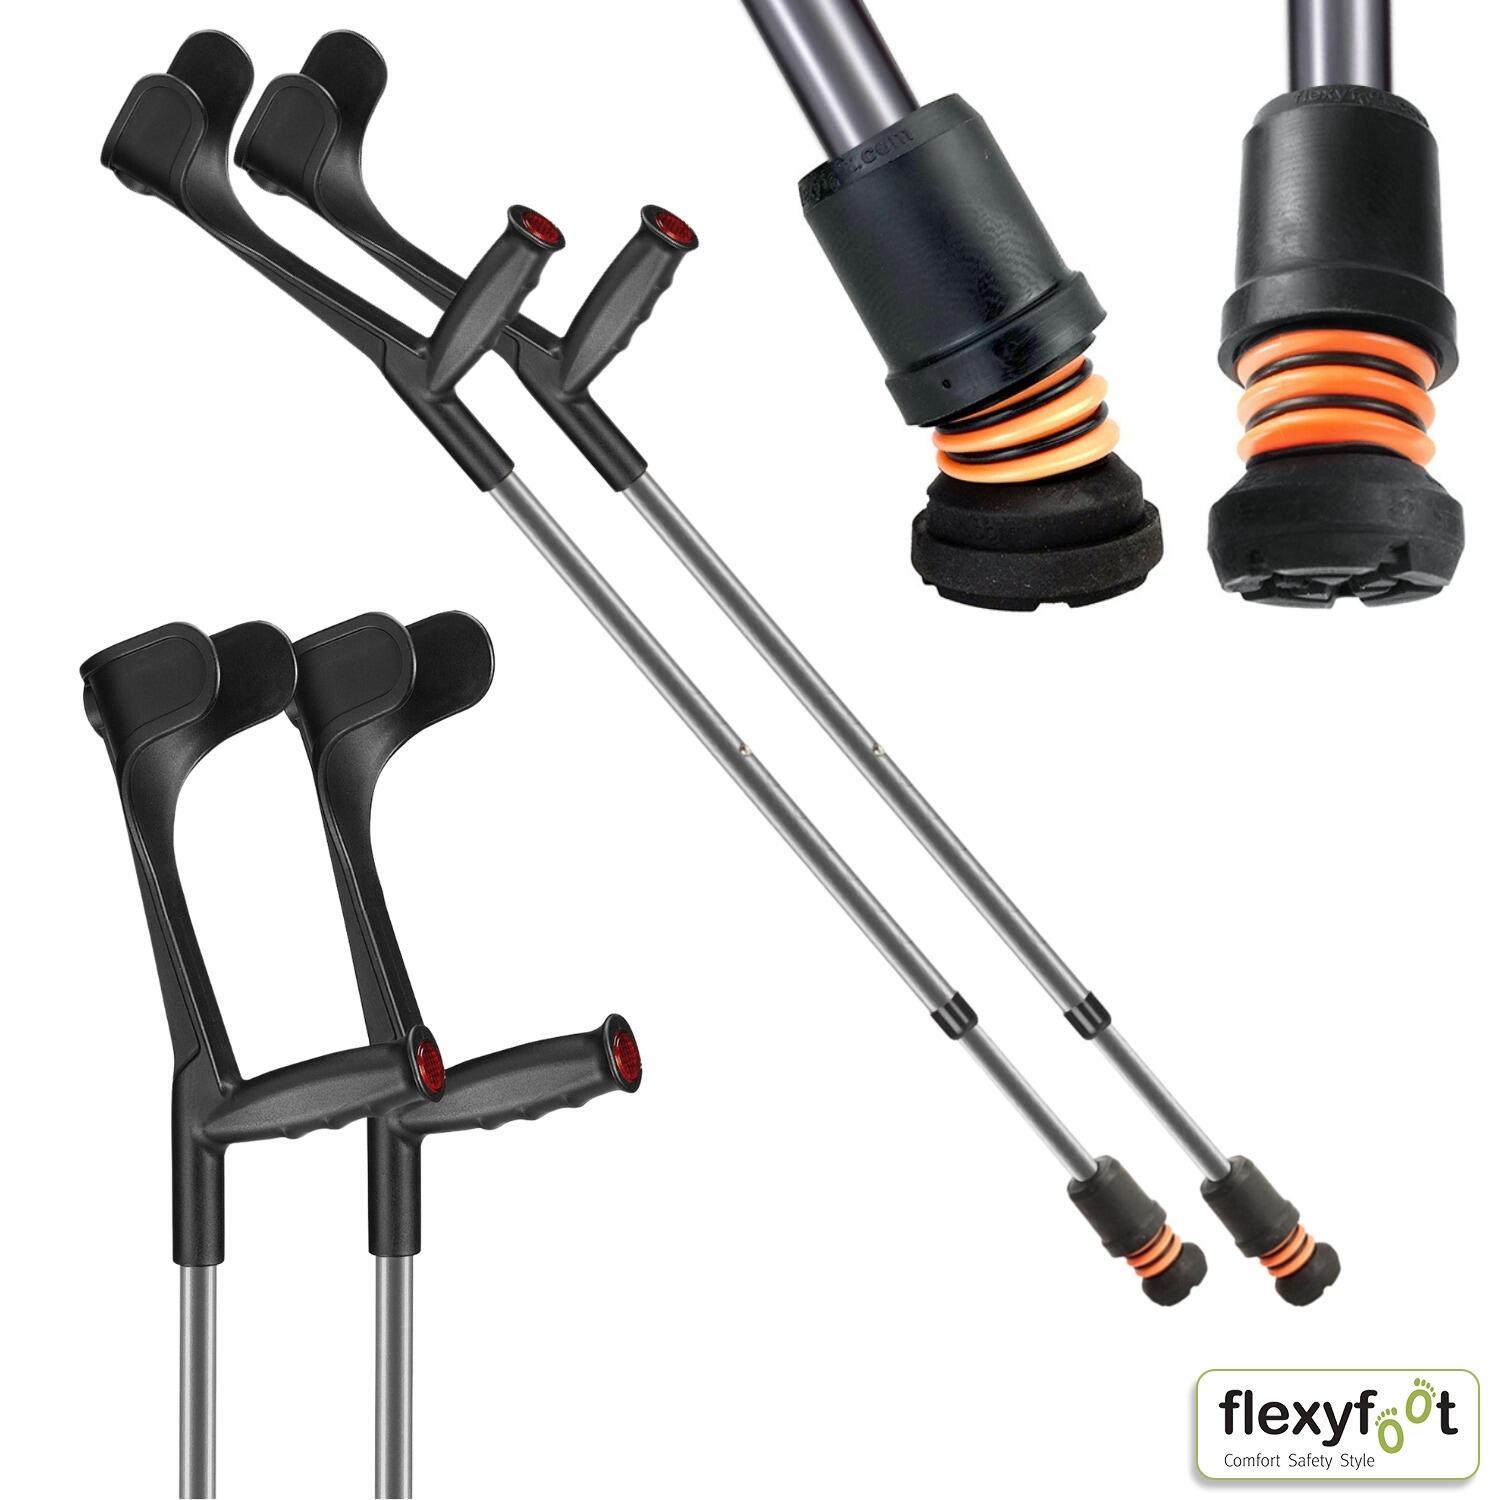 A pair of grey Flexyfoot Soft Grip Open Cuff Crutches